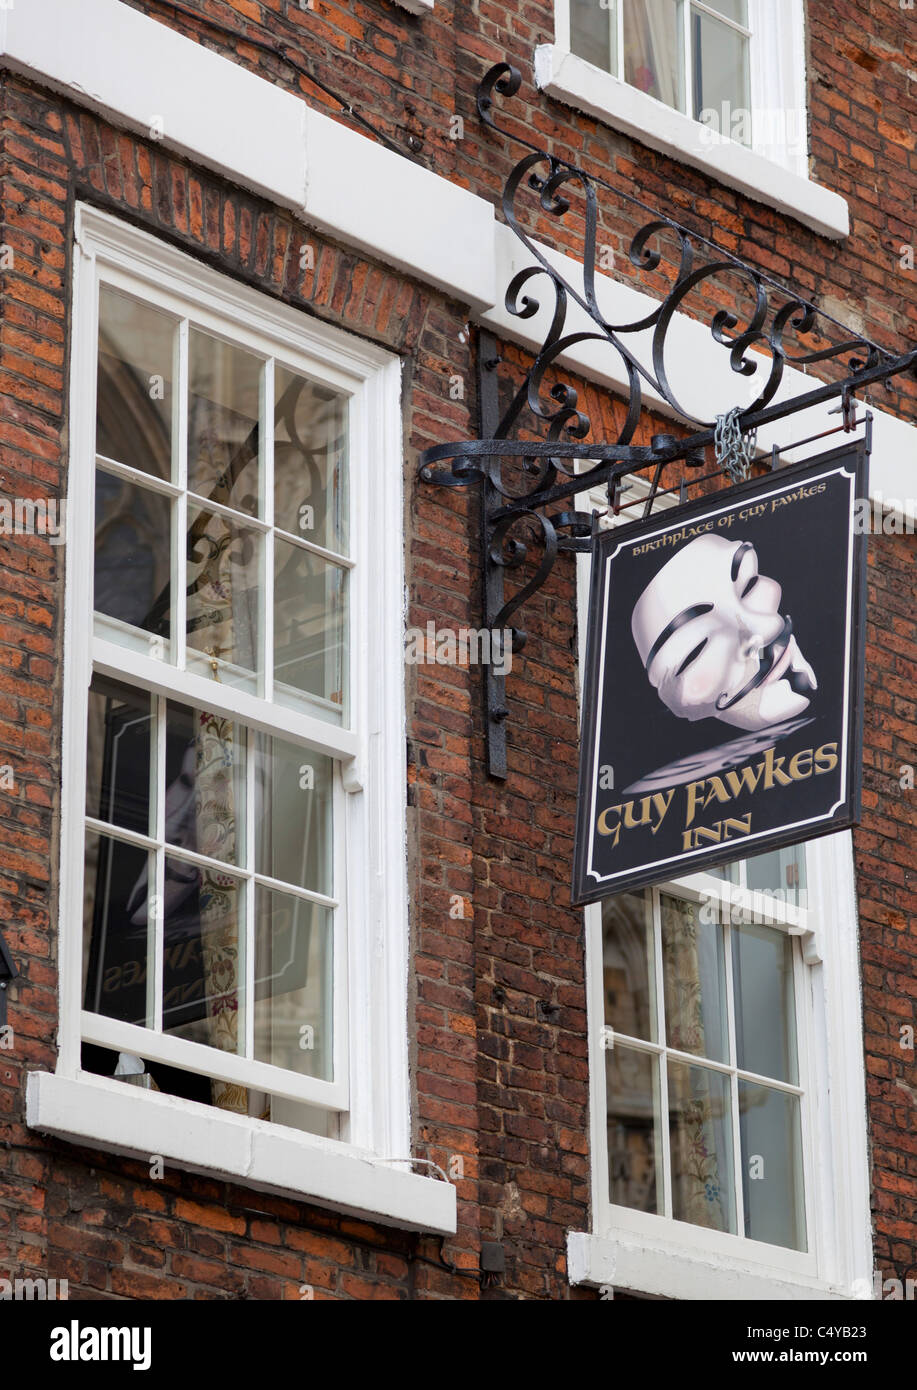 Guy Fawkes Inn sign High Petergate City of York Yorkshire England UK GB EU Europe Stock Photo